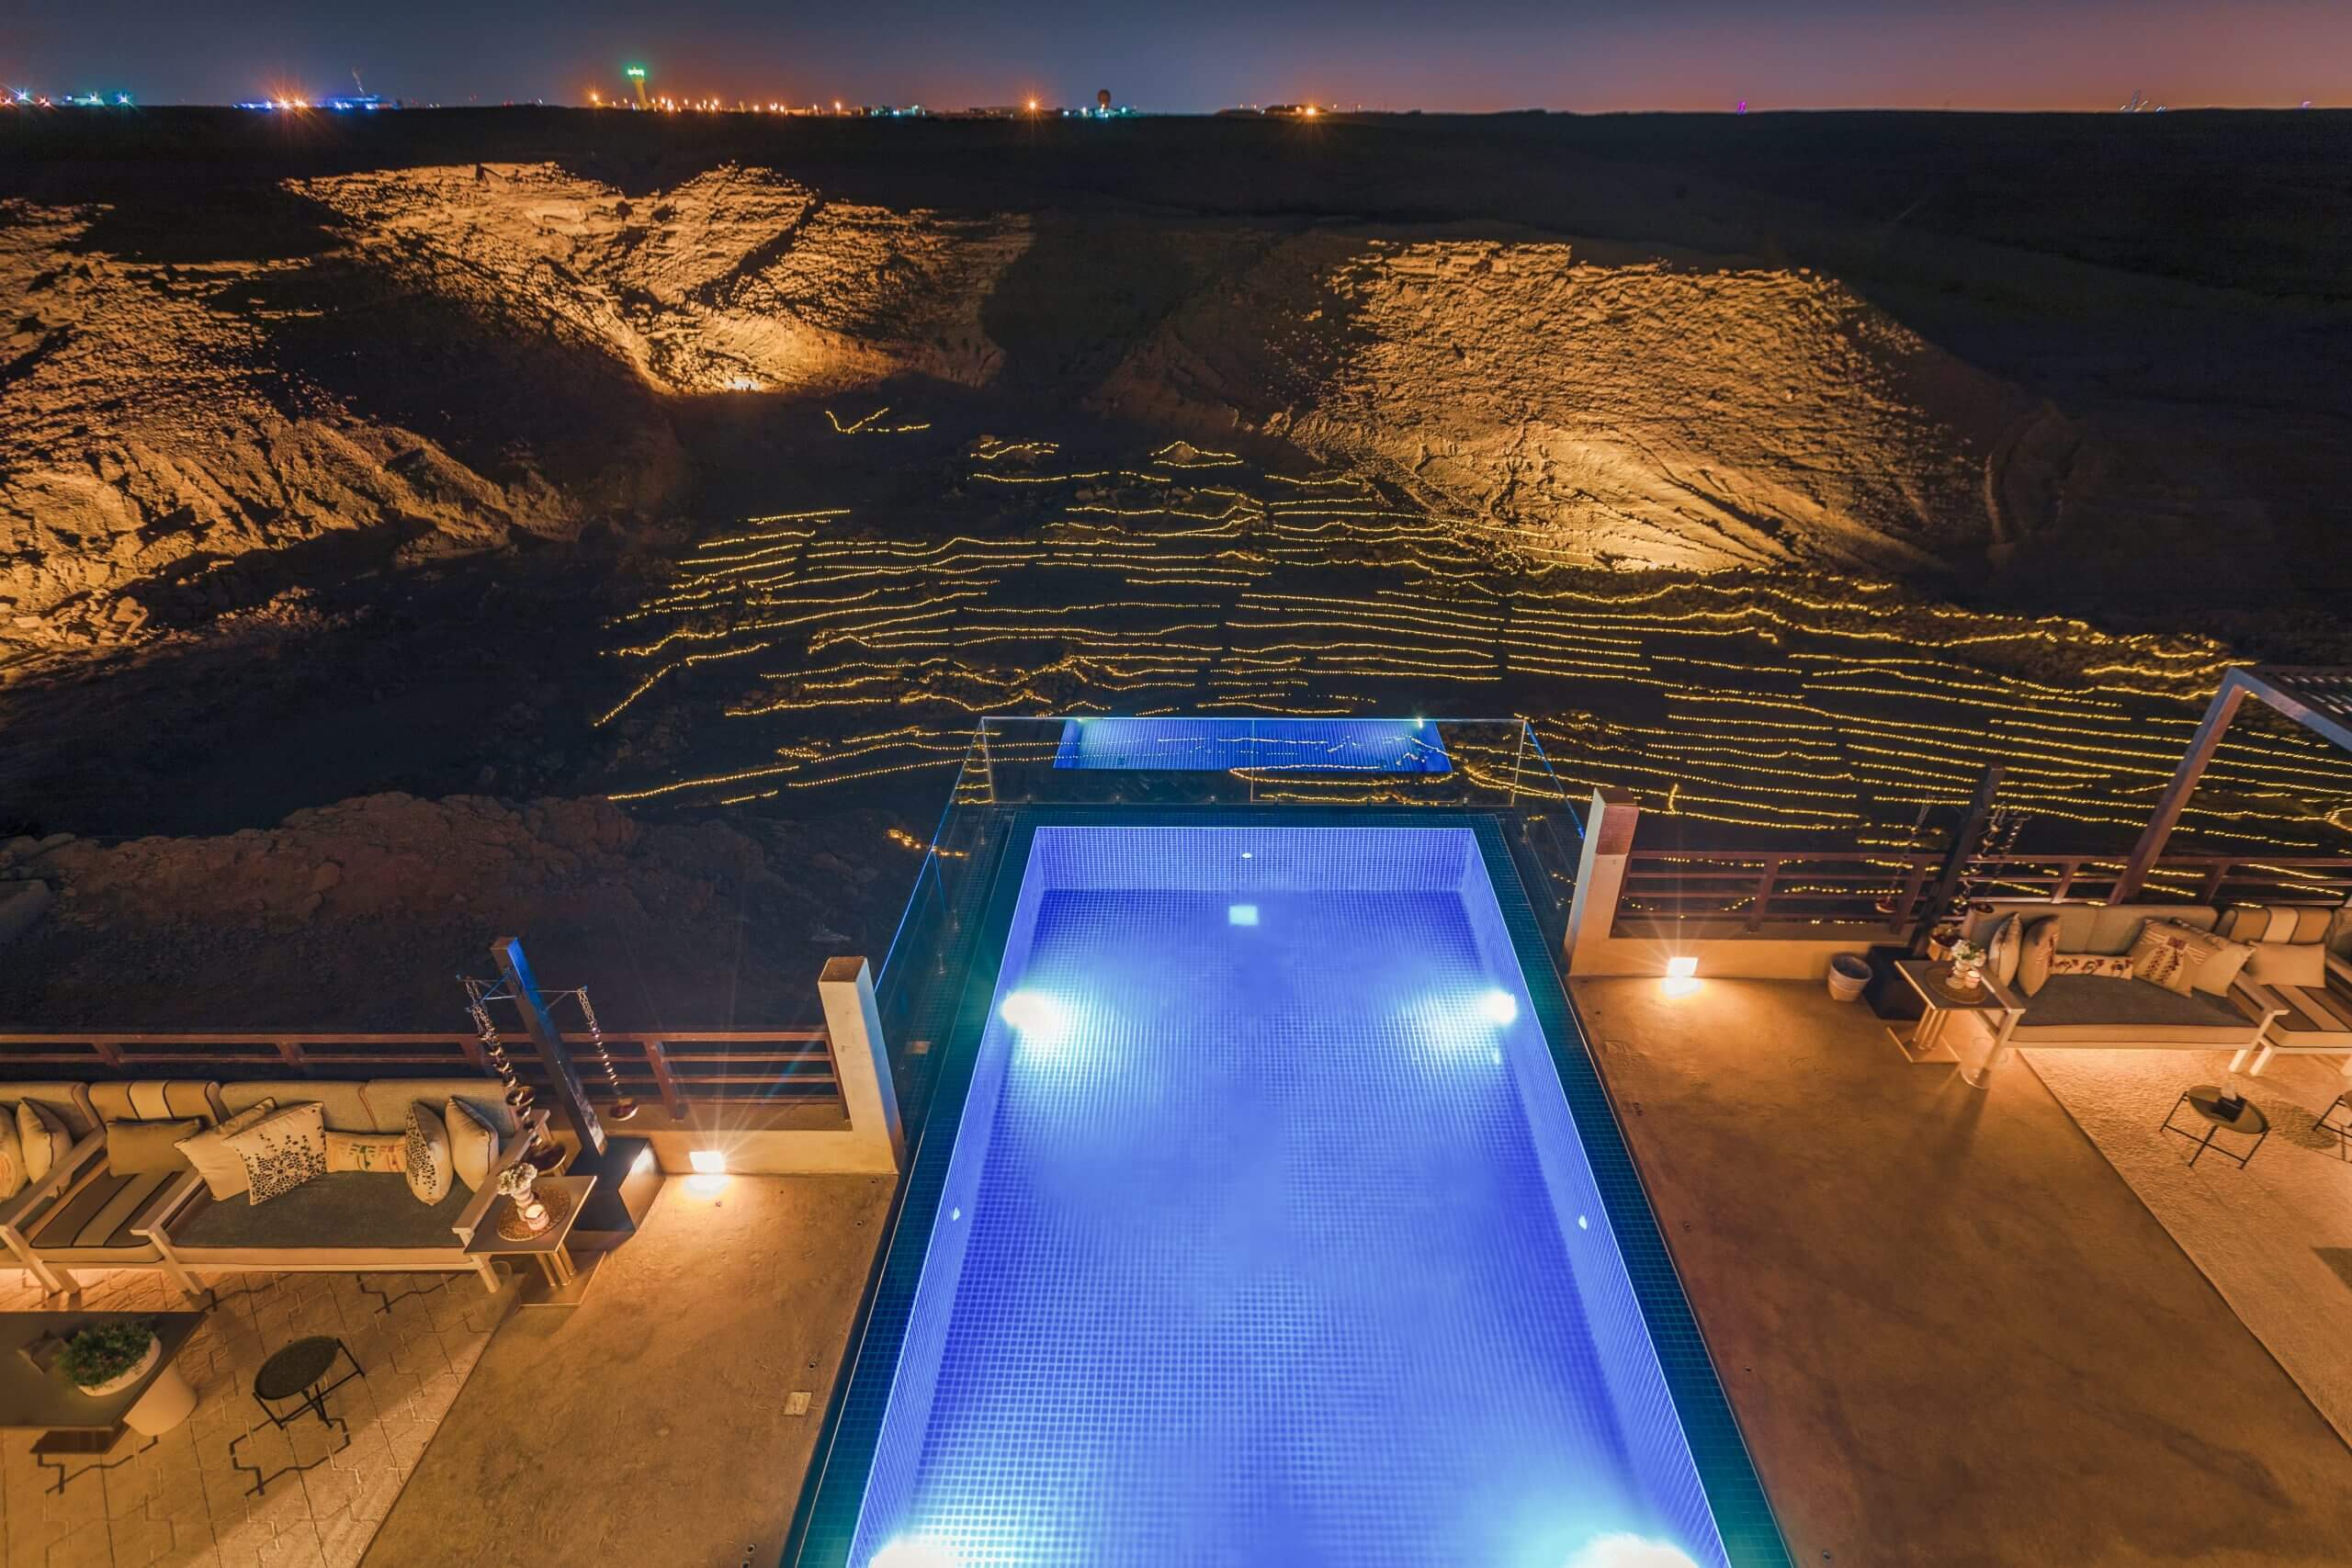 The Cliff Resort Riyadh (Chalet) - Maknaz